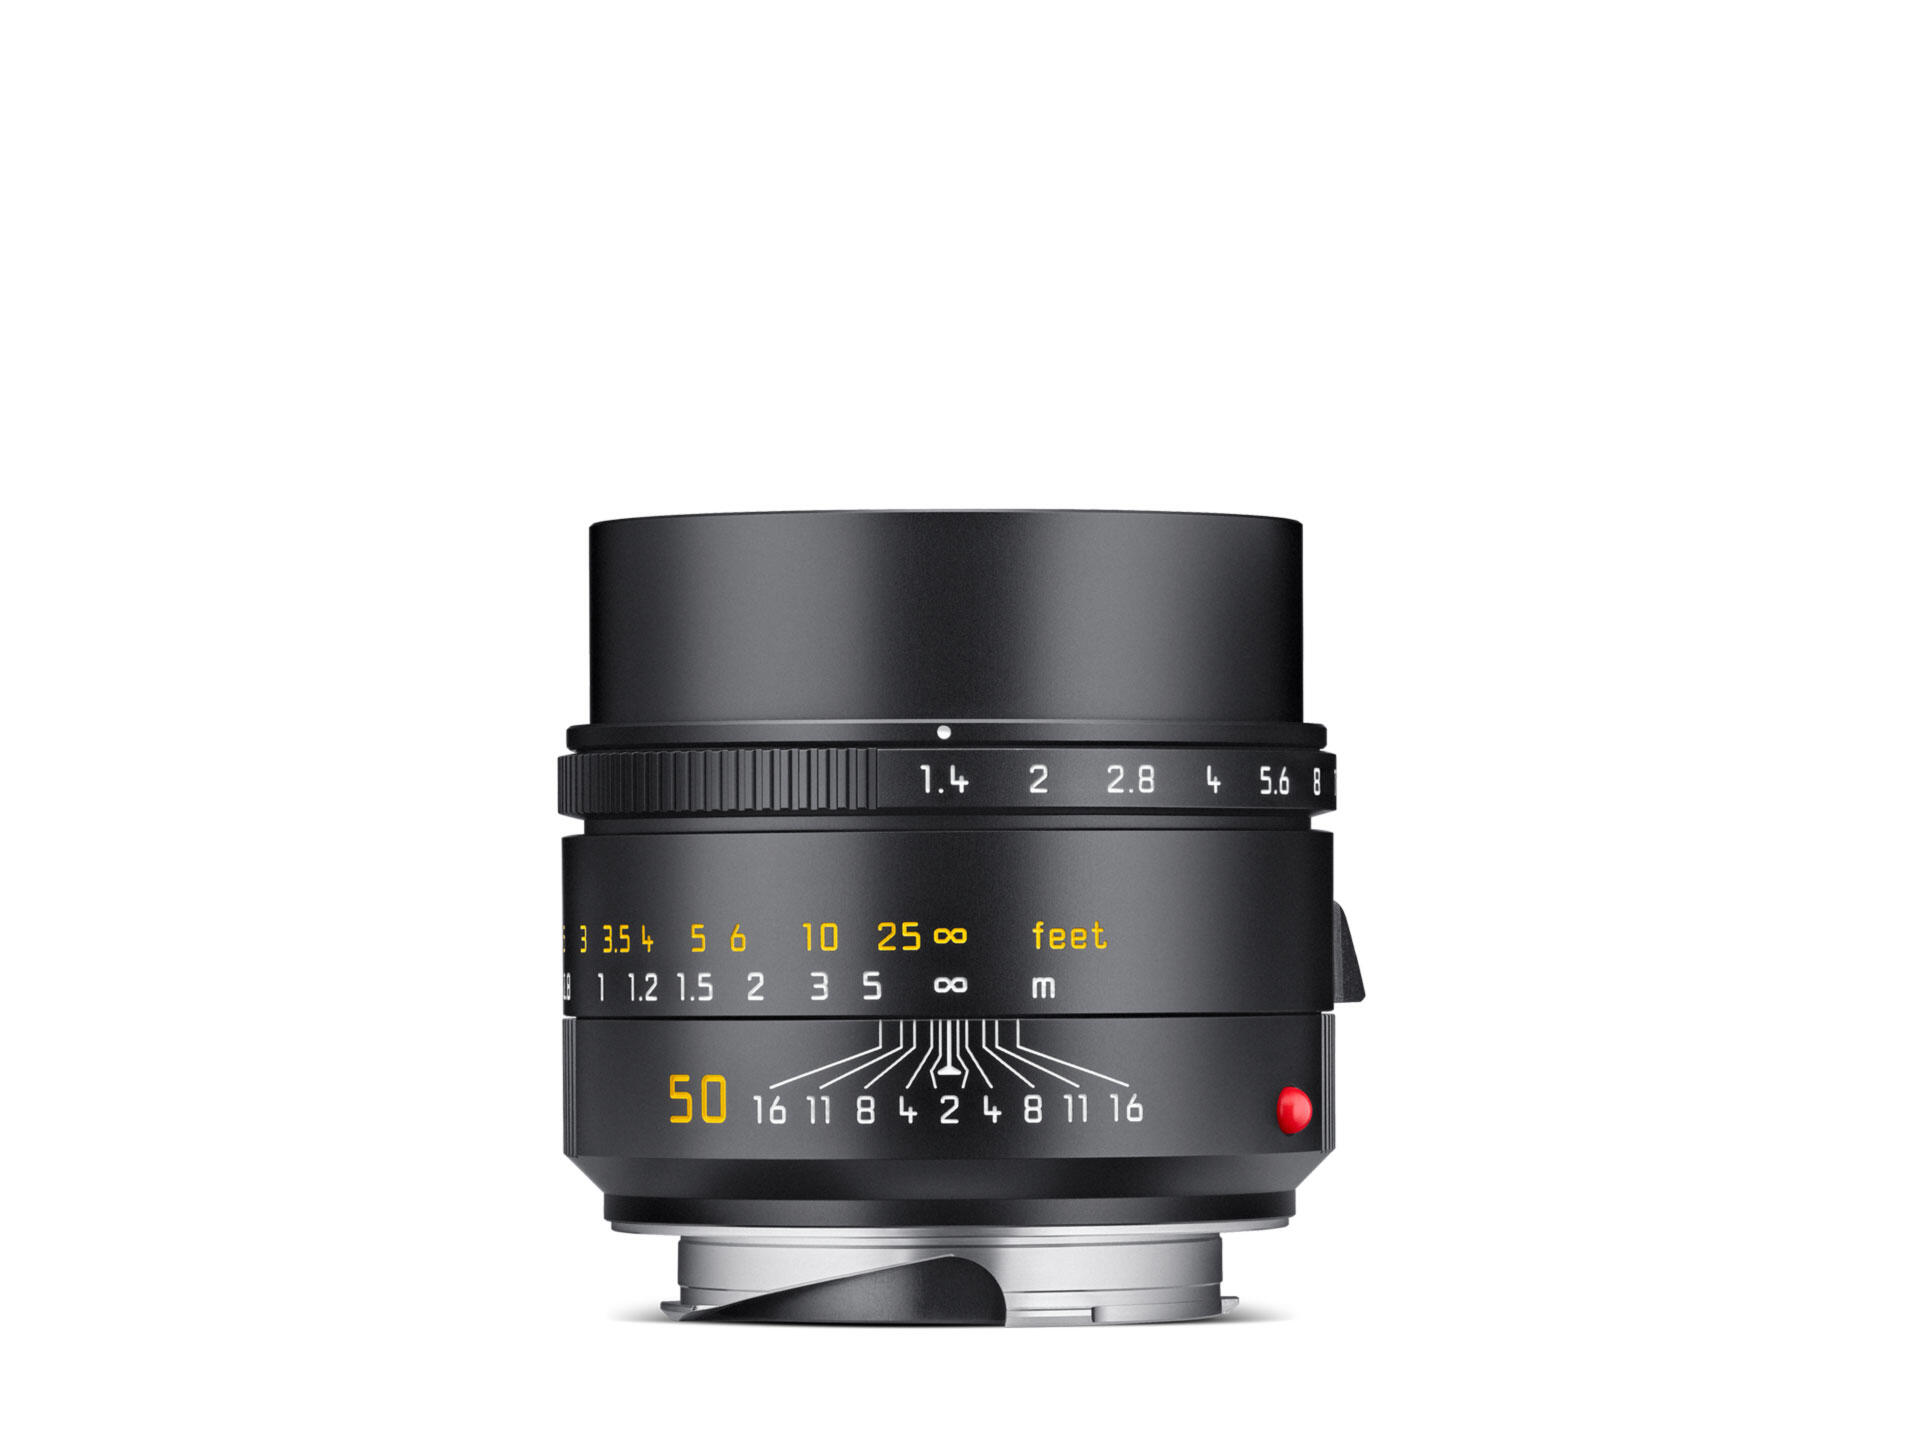 Summilux-M 50 f/1.4 ASPH. | Leica Camera US